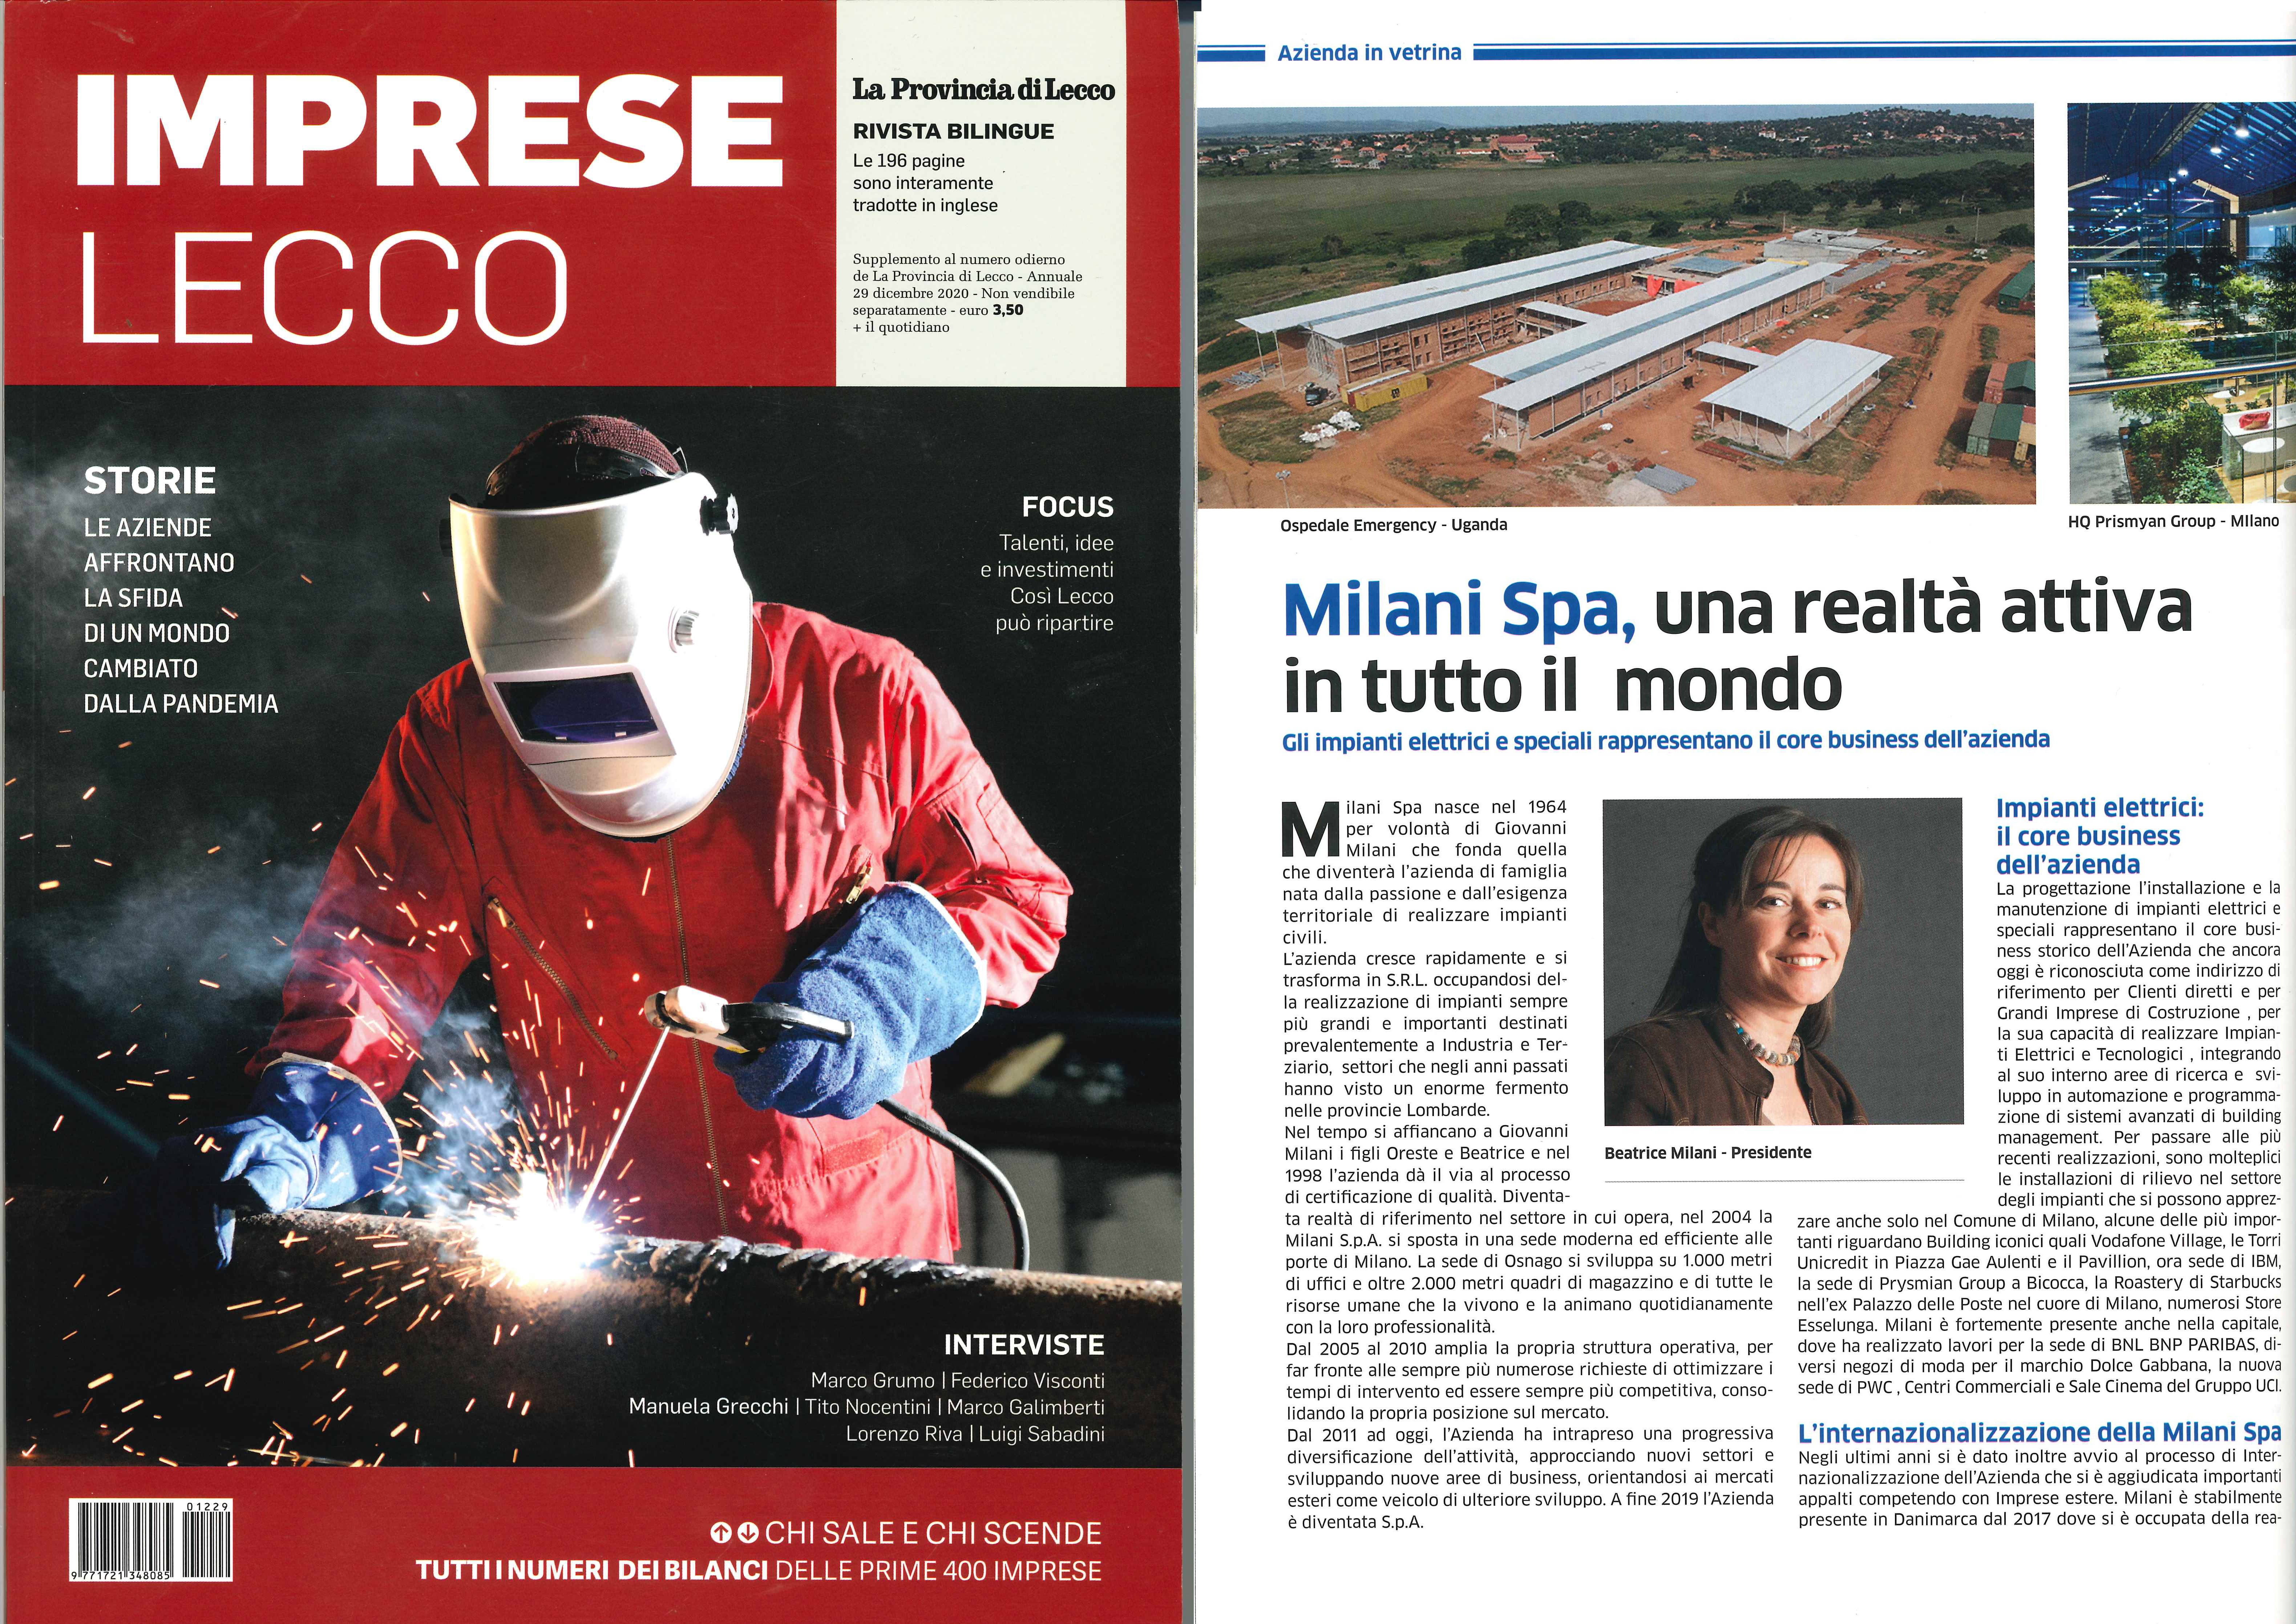 MILANI SPA featured on “Imprese Lecco” magazine